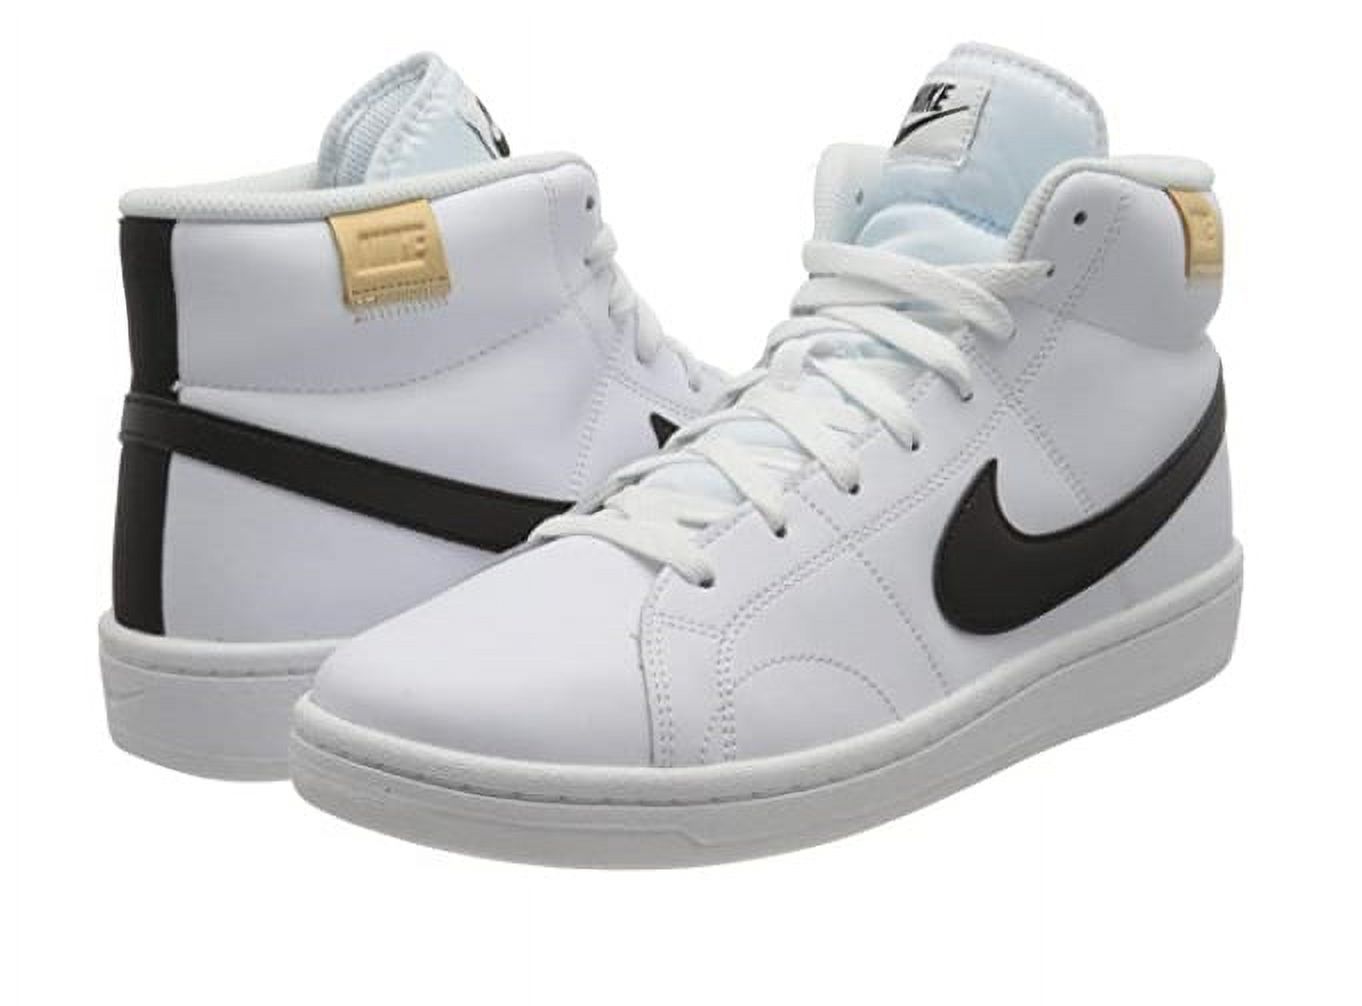 Nike Men's Tennis Shoe, White Black White Onyx, 8 - image 2 of 2